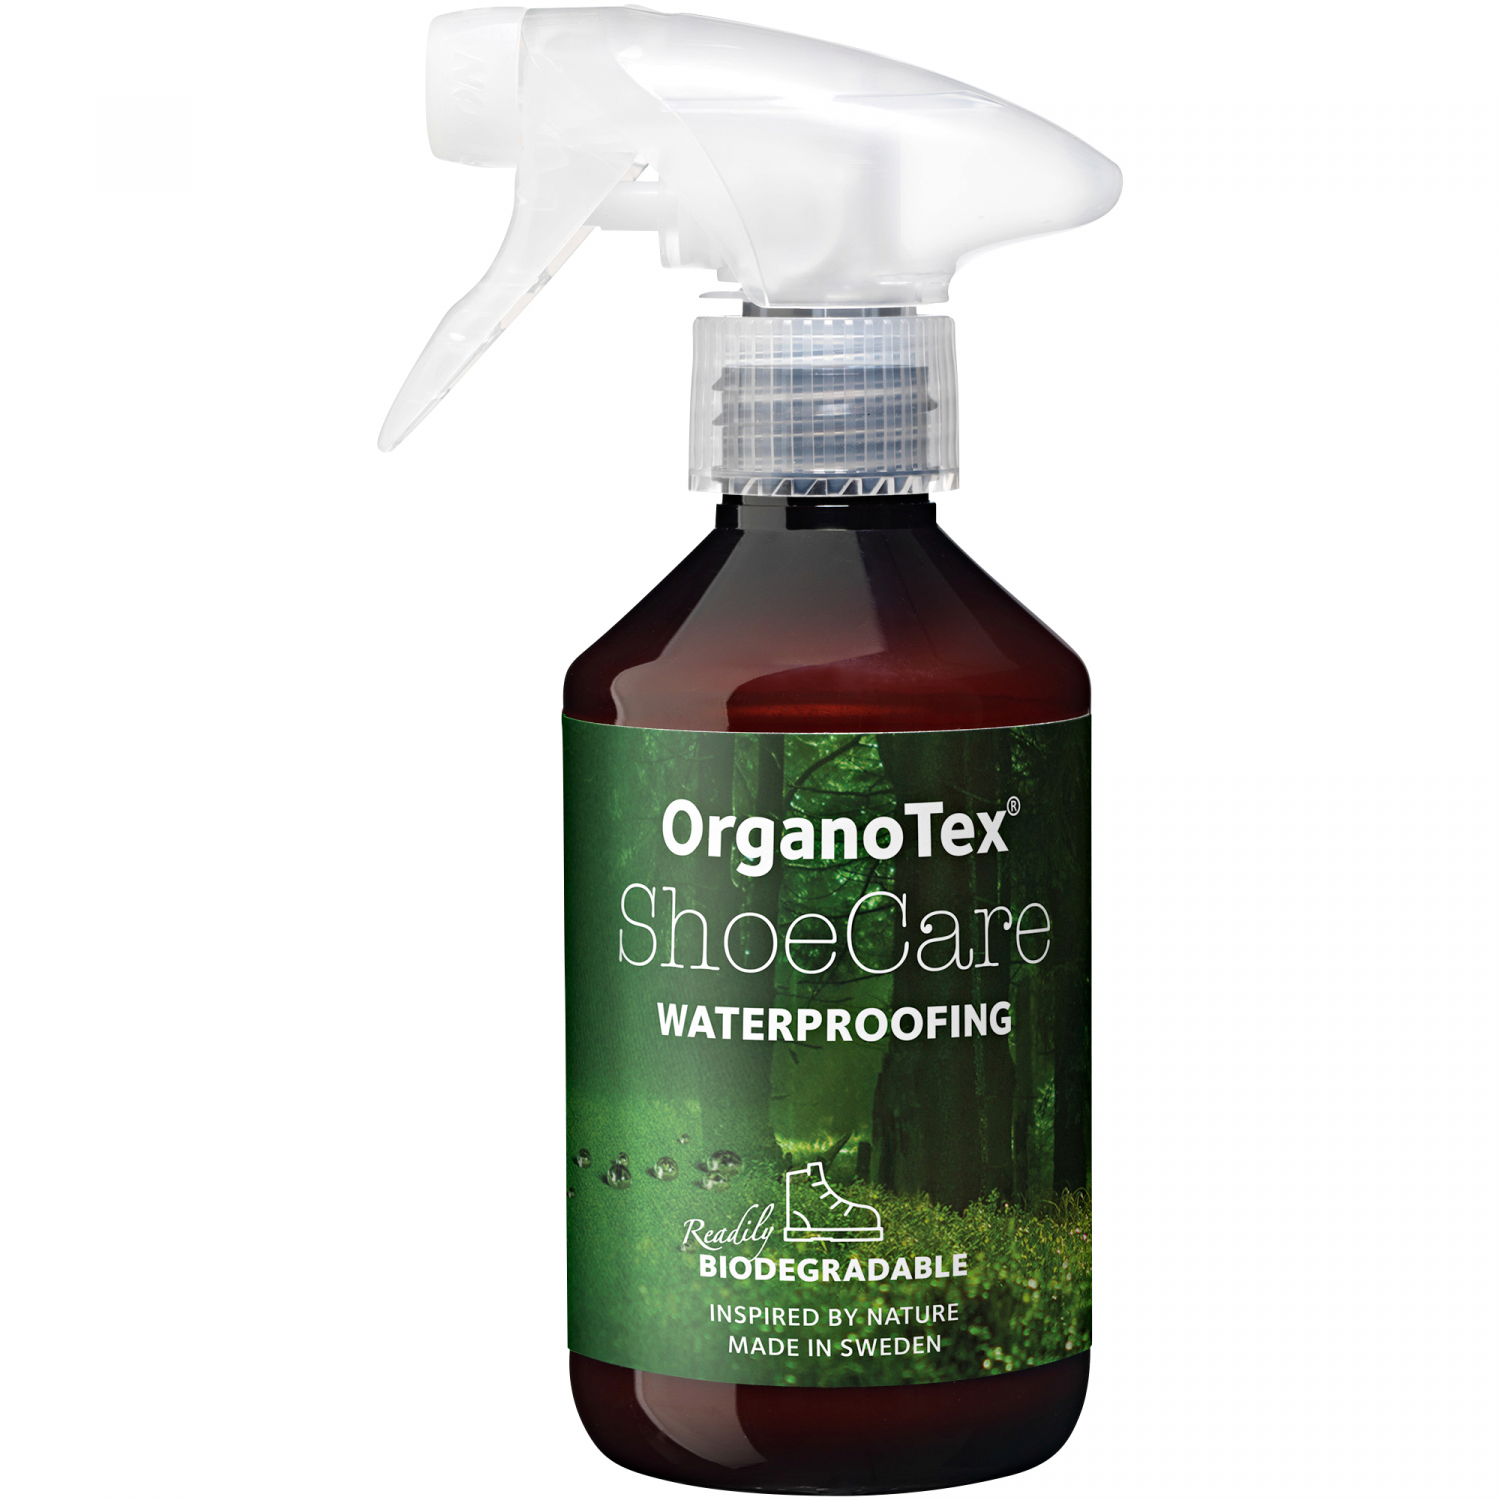 OrganoTex ShoeCare Waterproofing 